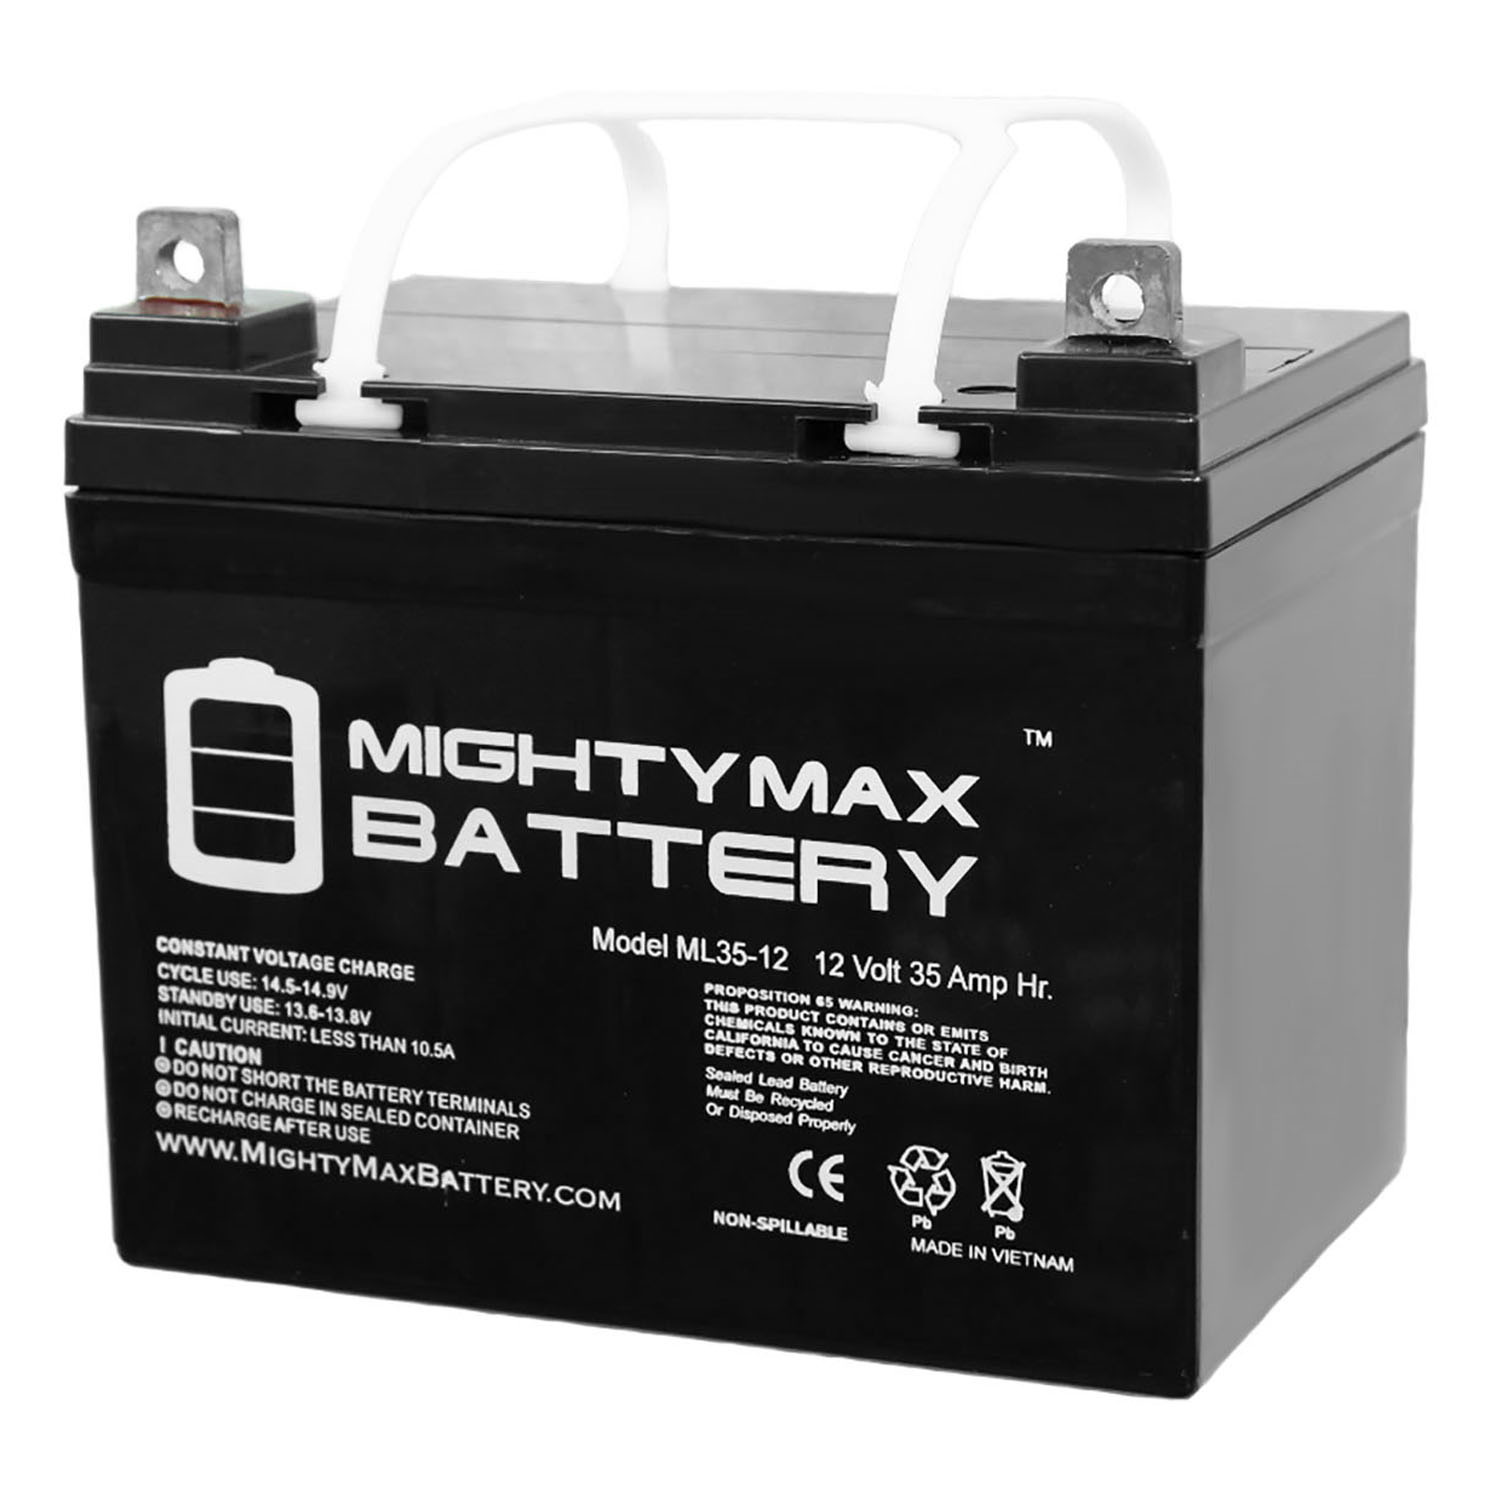 Batterie AGM VRLA 12V 40Ah Green Cell - Garantie de satisfaction